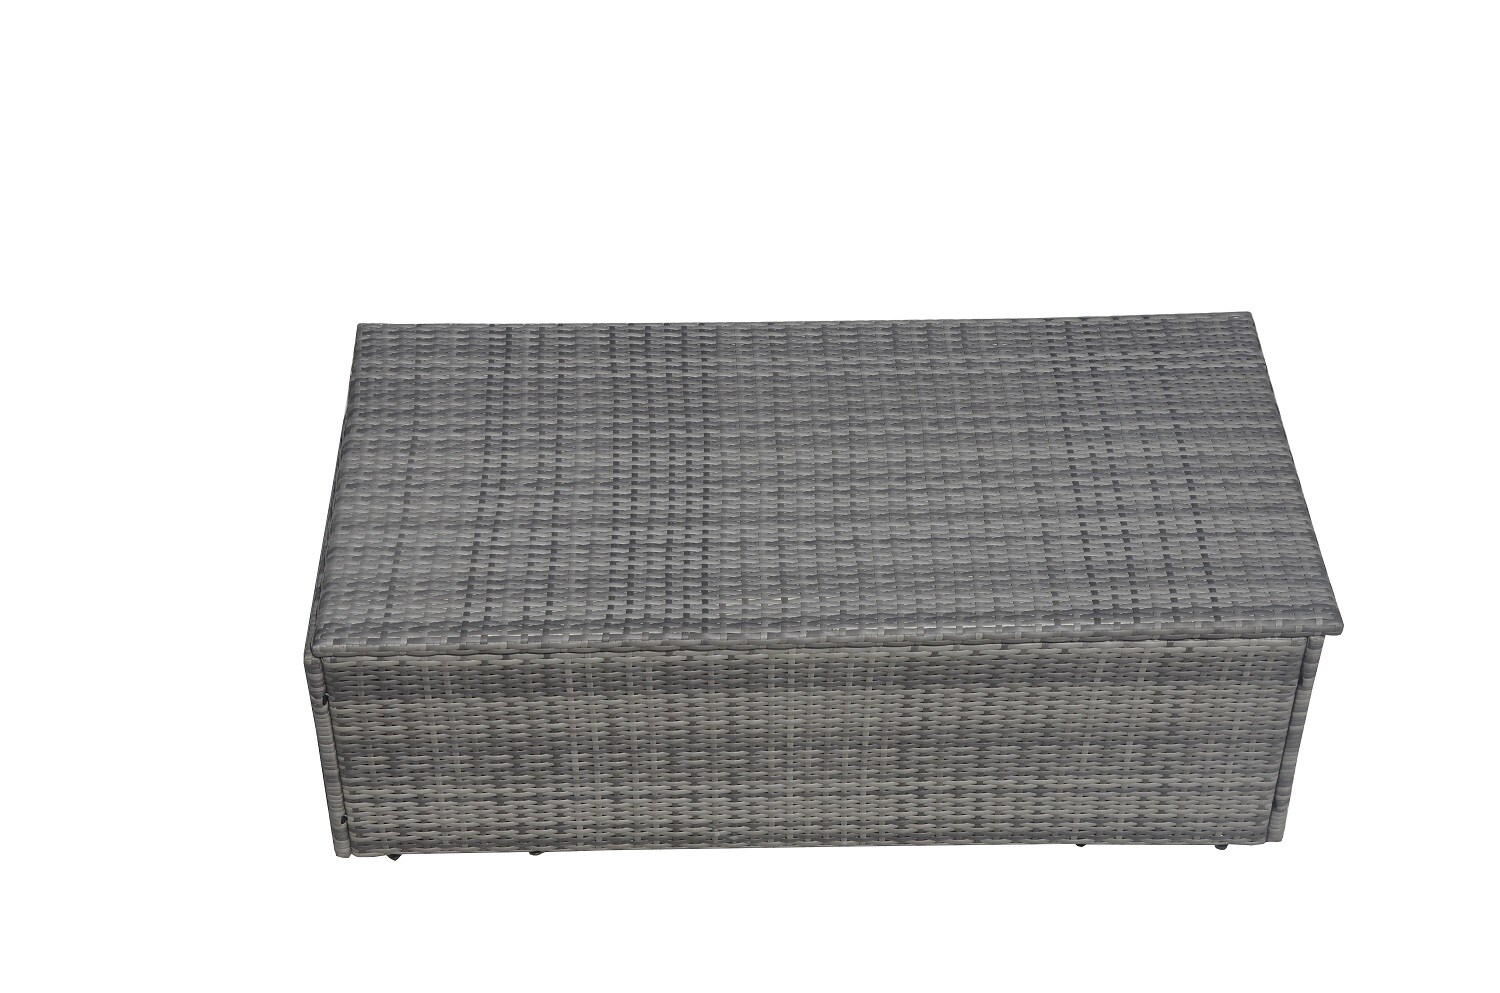 Moda Furnishings Sofa set of 1503 in gray 6-Piece Wicker Patio ...